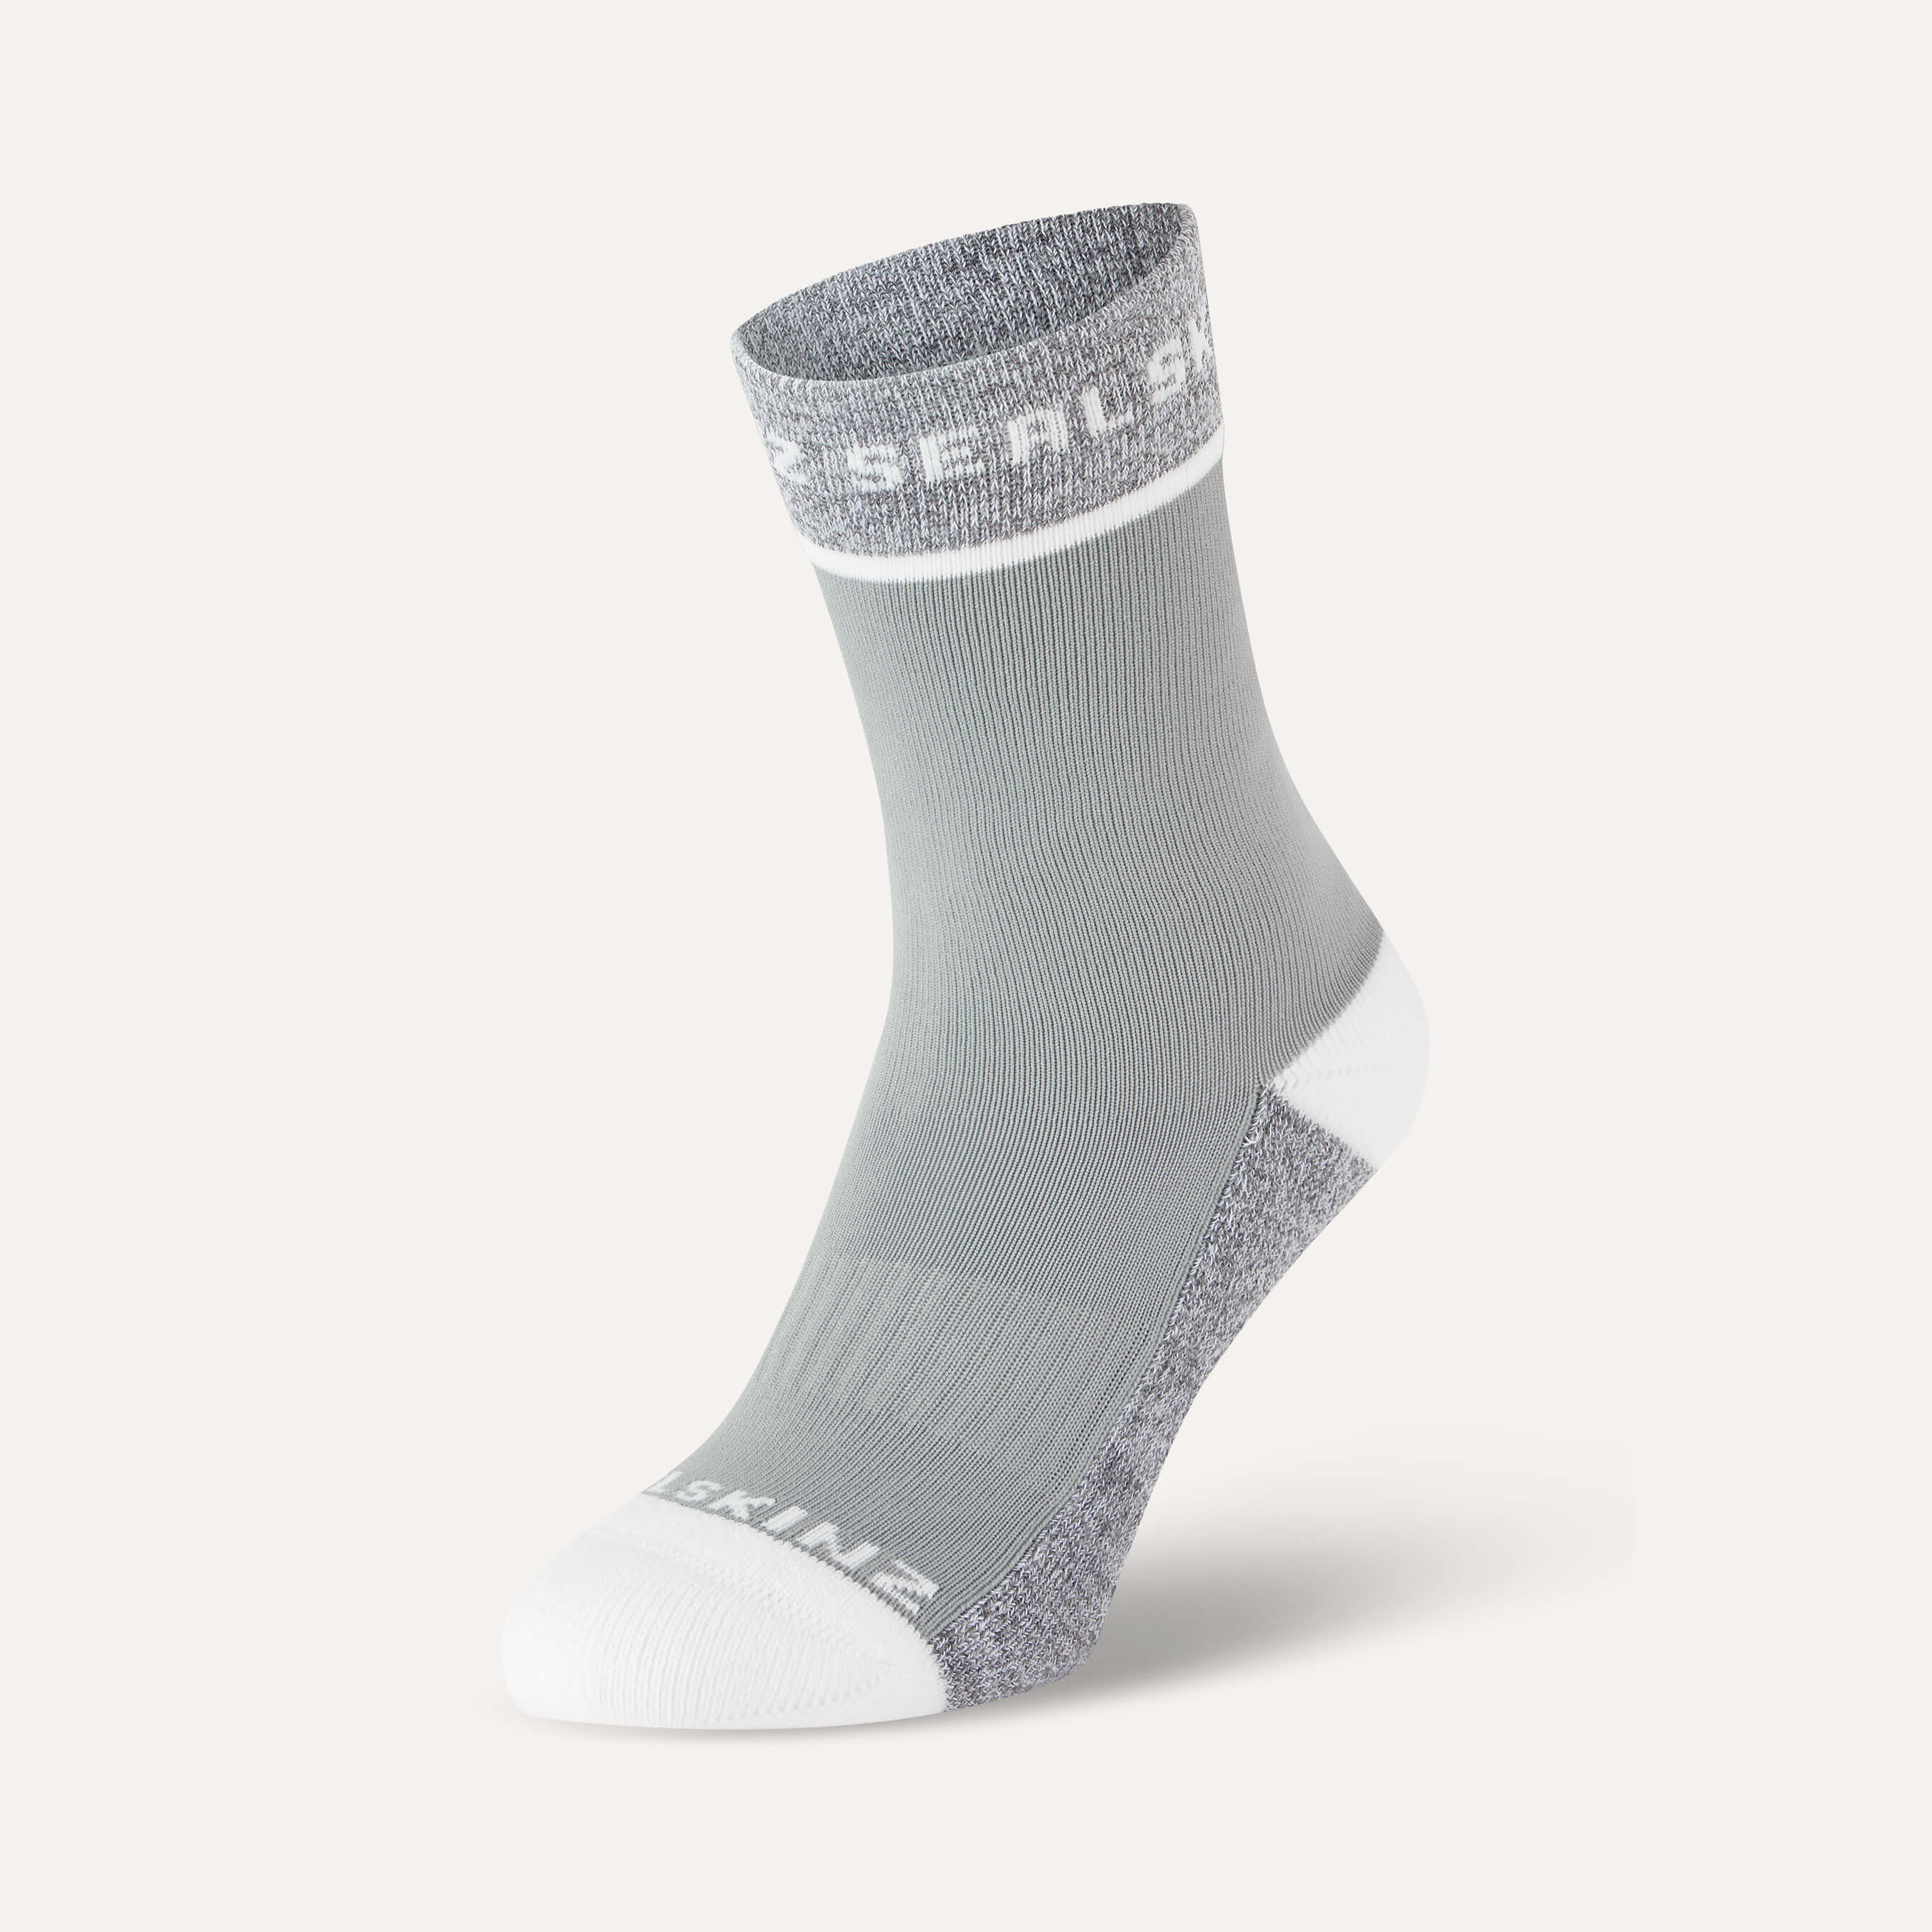 2 NIP Lunya Restore Seamless Socks No Slip OS One Size Mercurial Grey  Heather